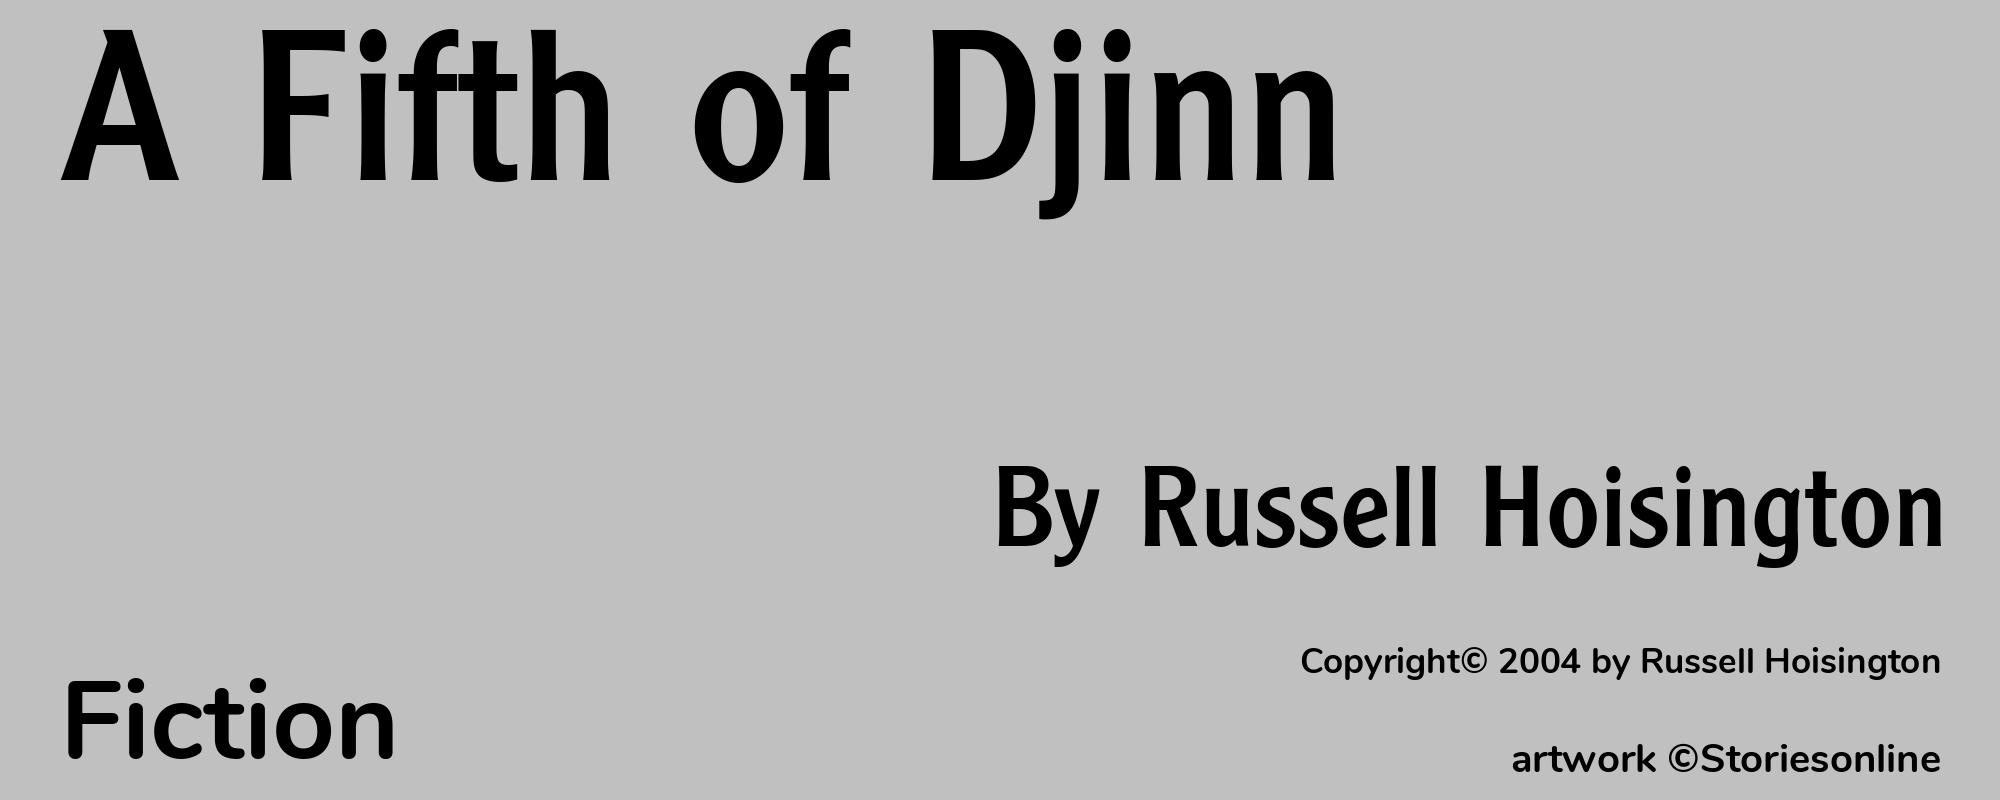 A Fifth of Djinn - Cover